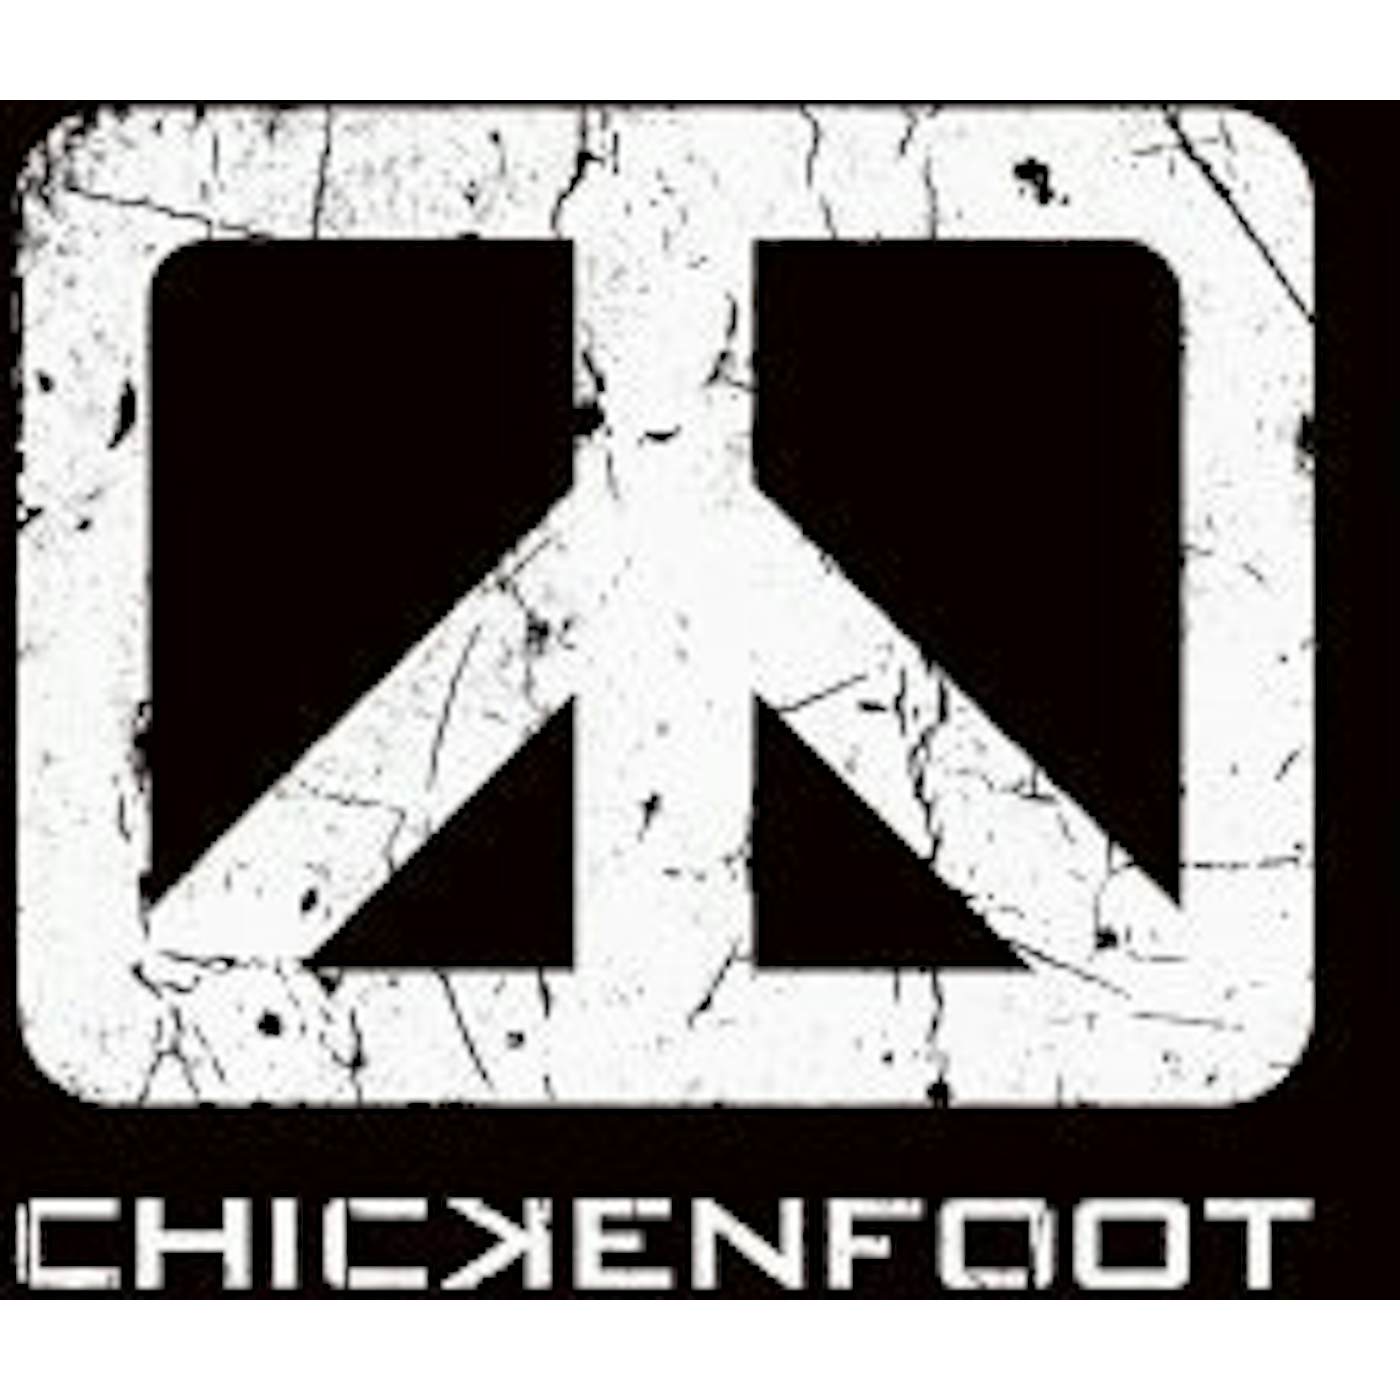 Chickenfoot Vinyl Record